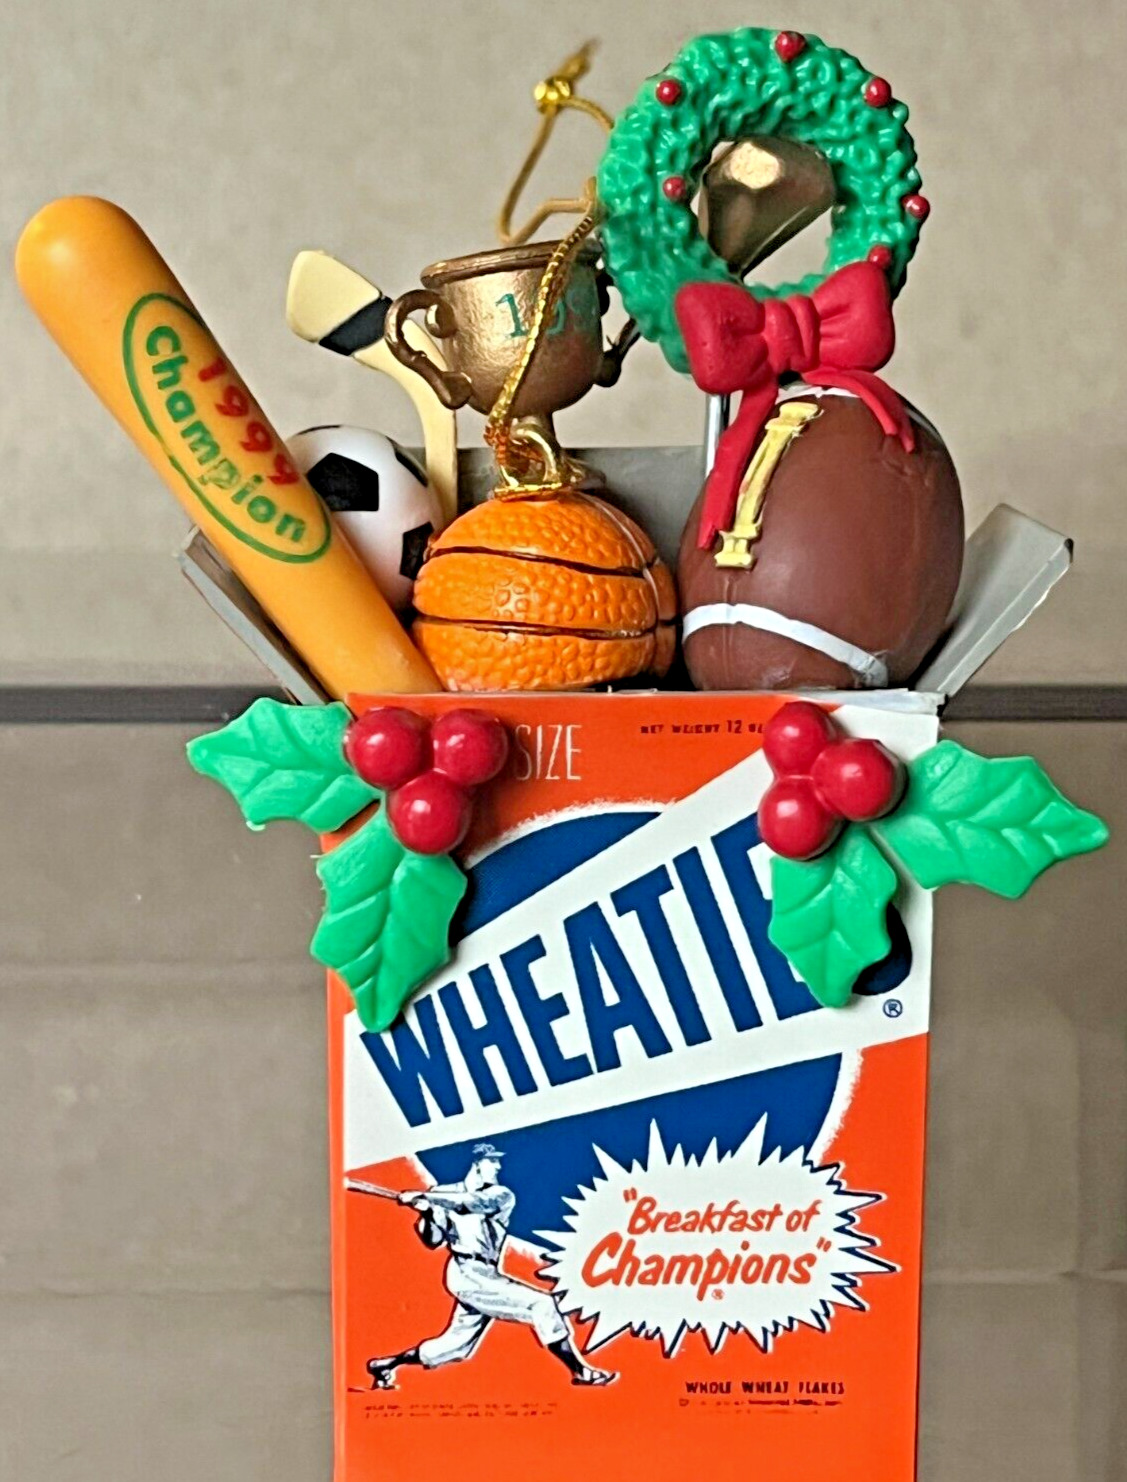 VNTG Enesco Wheaties Cereal Box Ornament 1999 Sports Christmas Football/Baseball